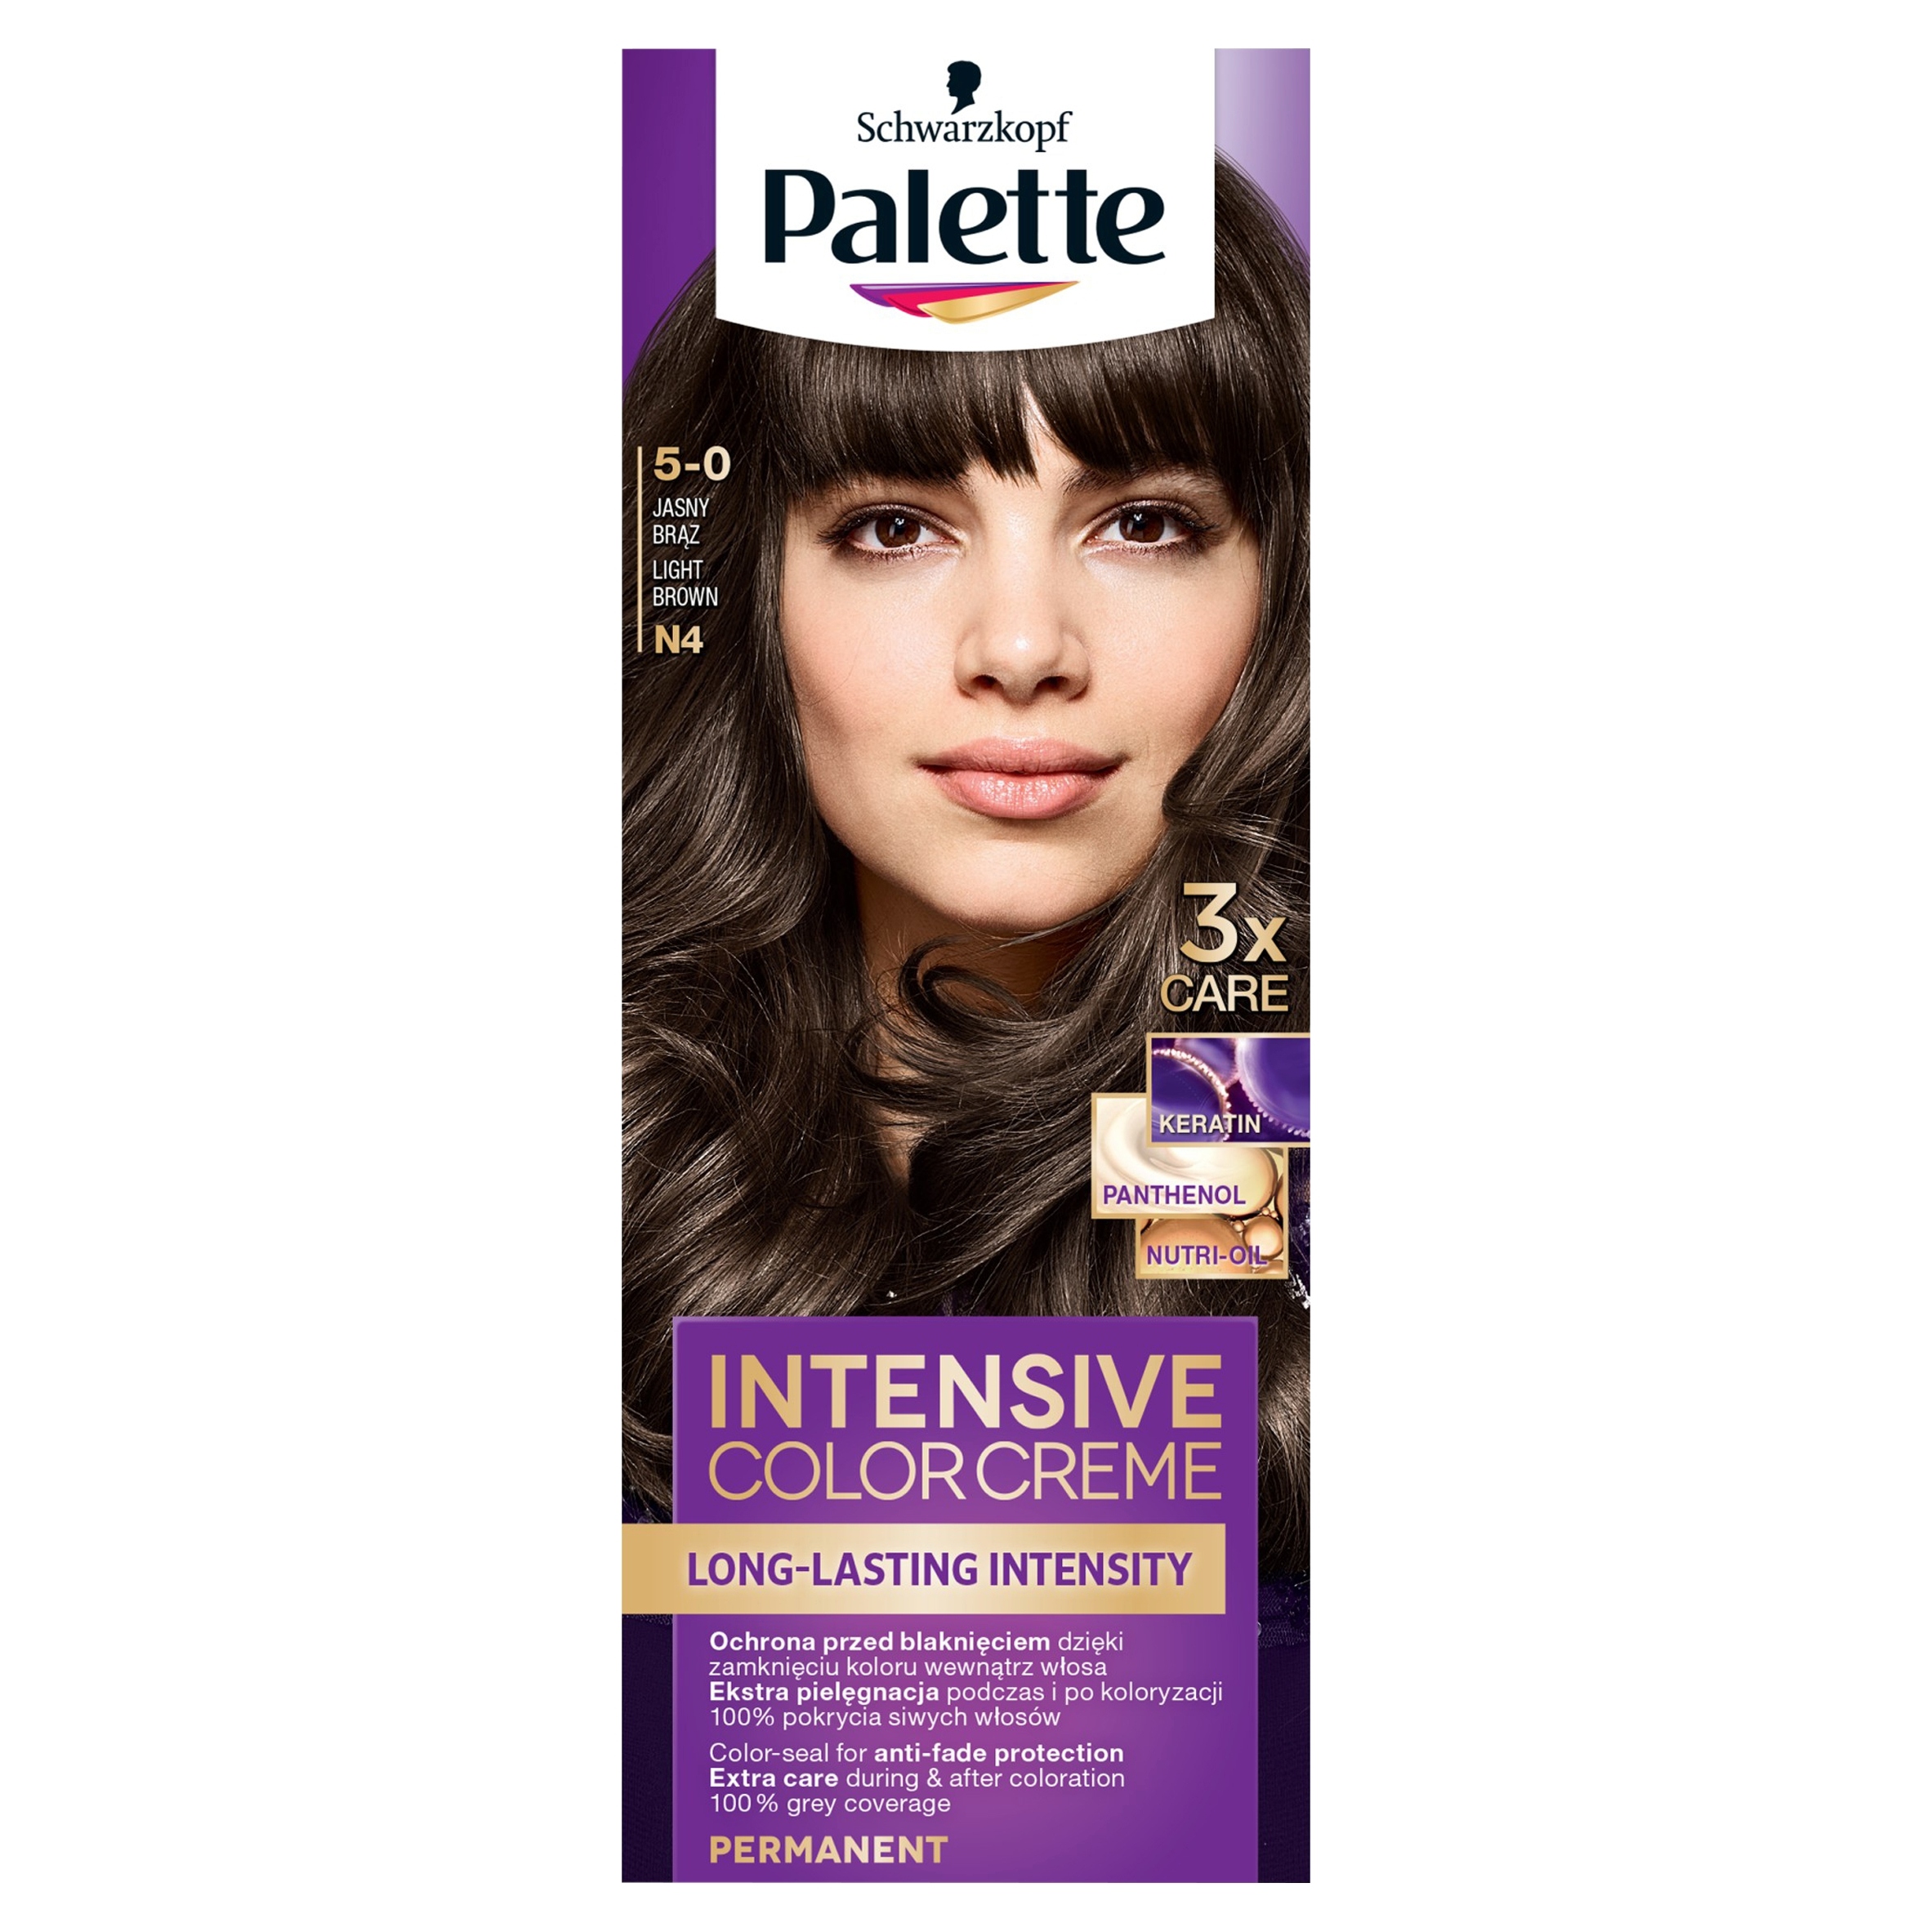 Palette Intensive Color Creme farba do włosów P1 13818431315 - Allegro.pl